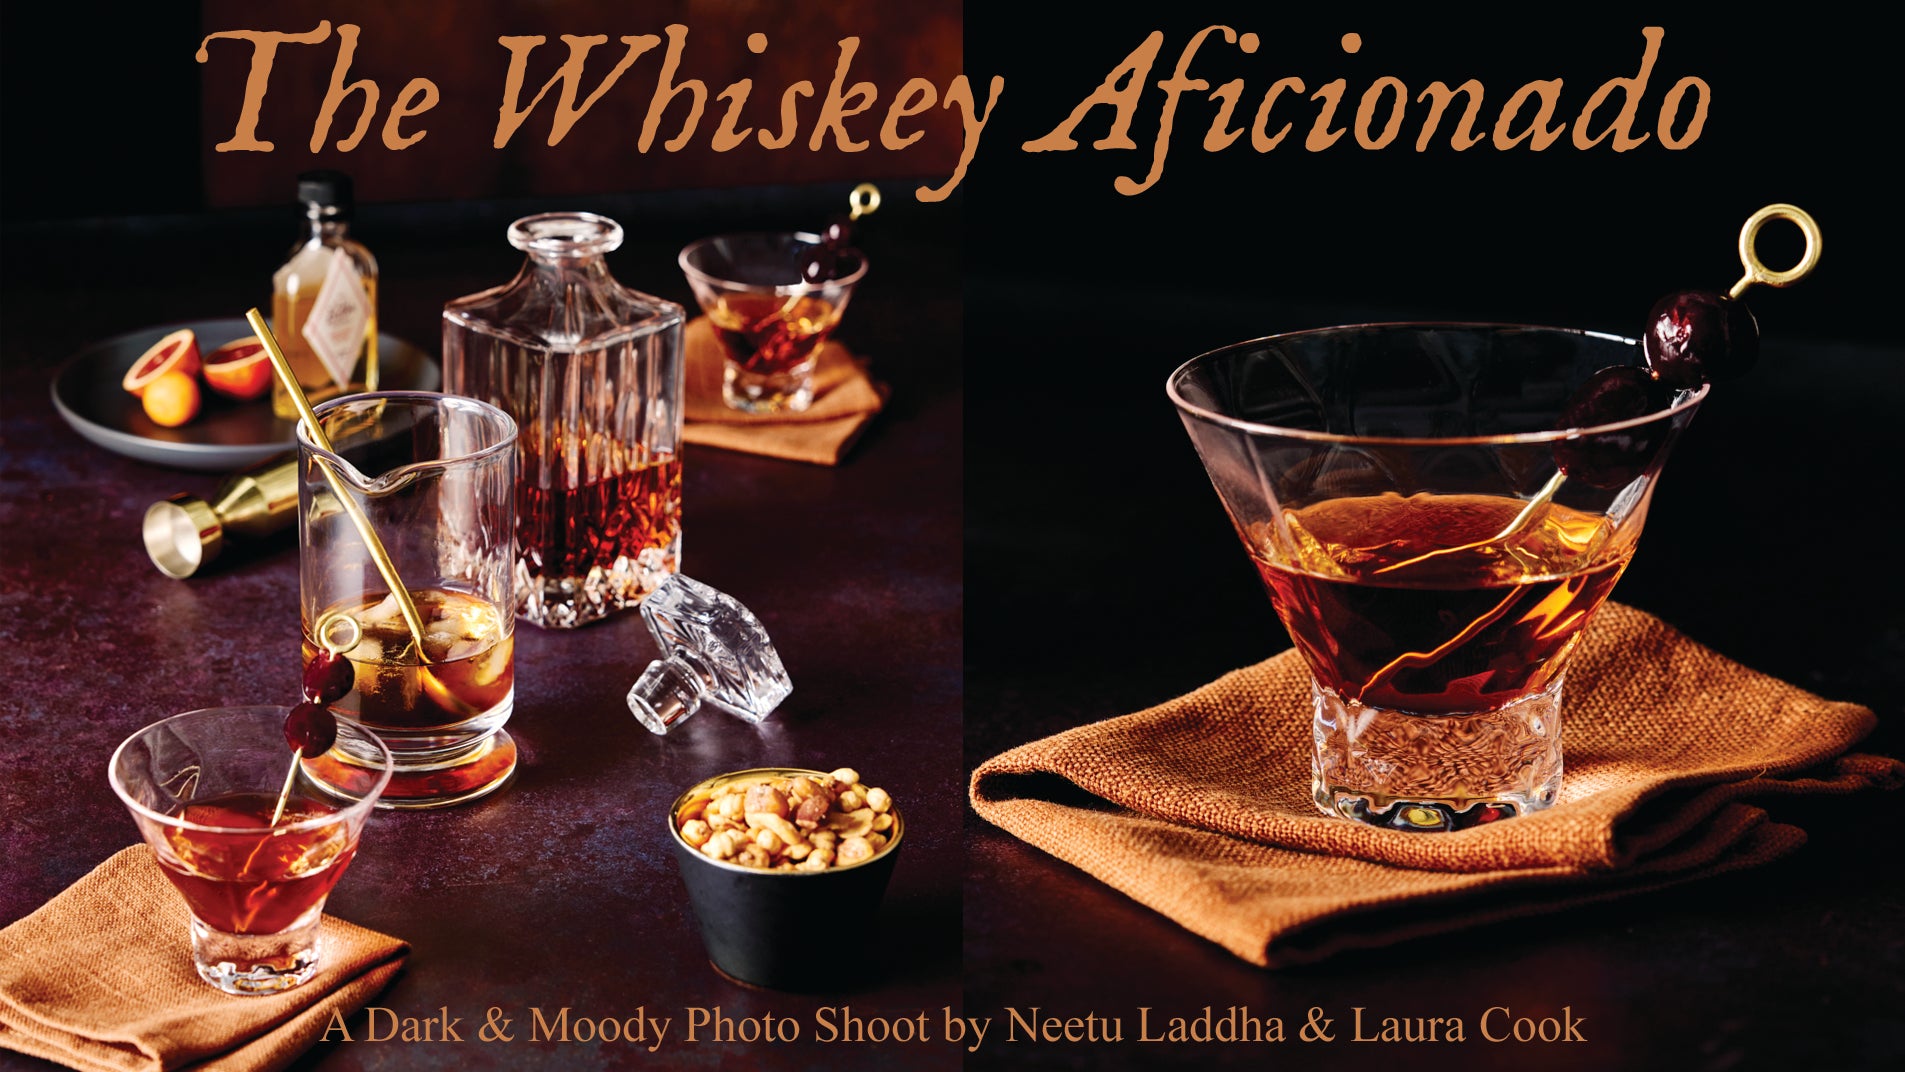 Dark & Moody: for the Whiskey Aficionado